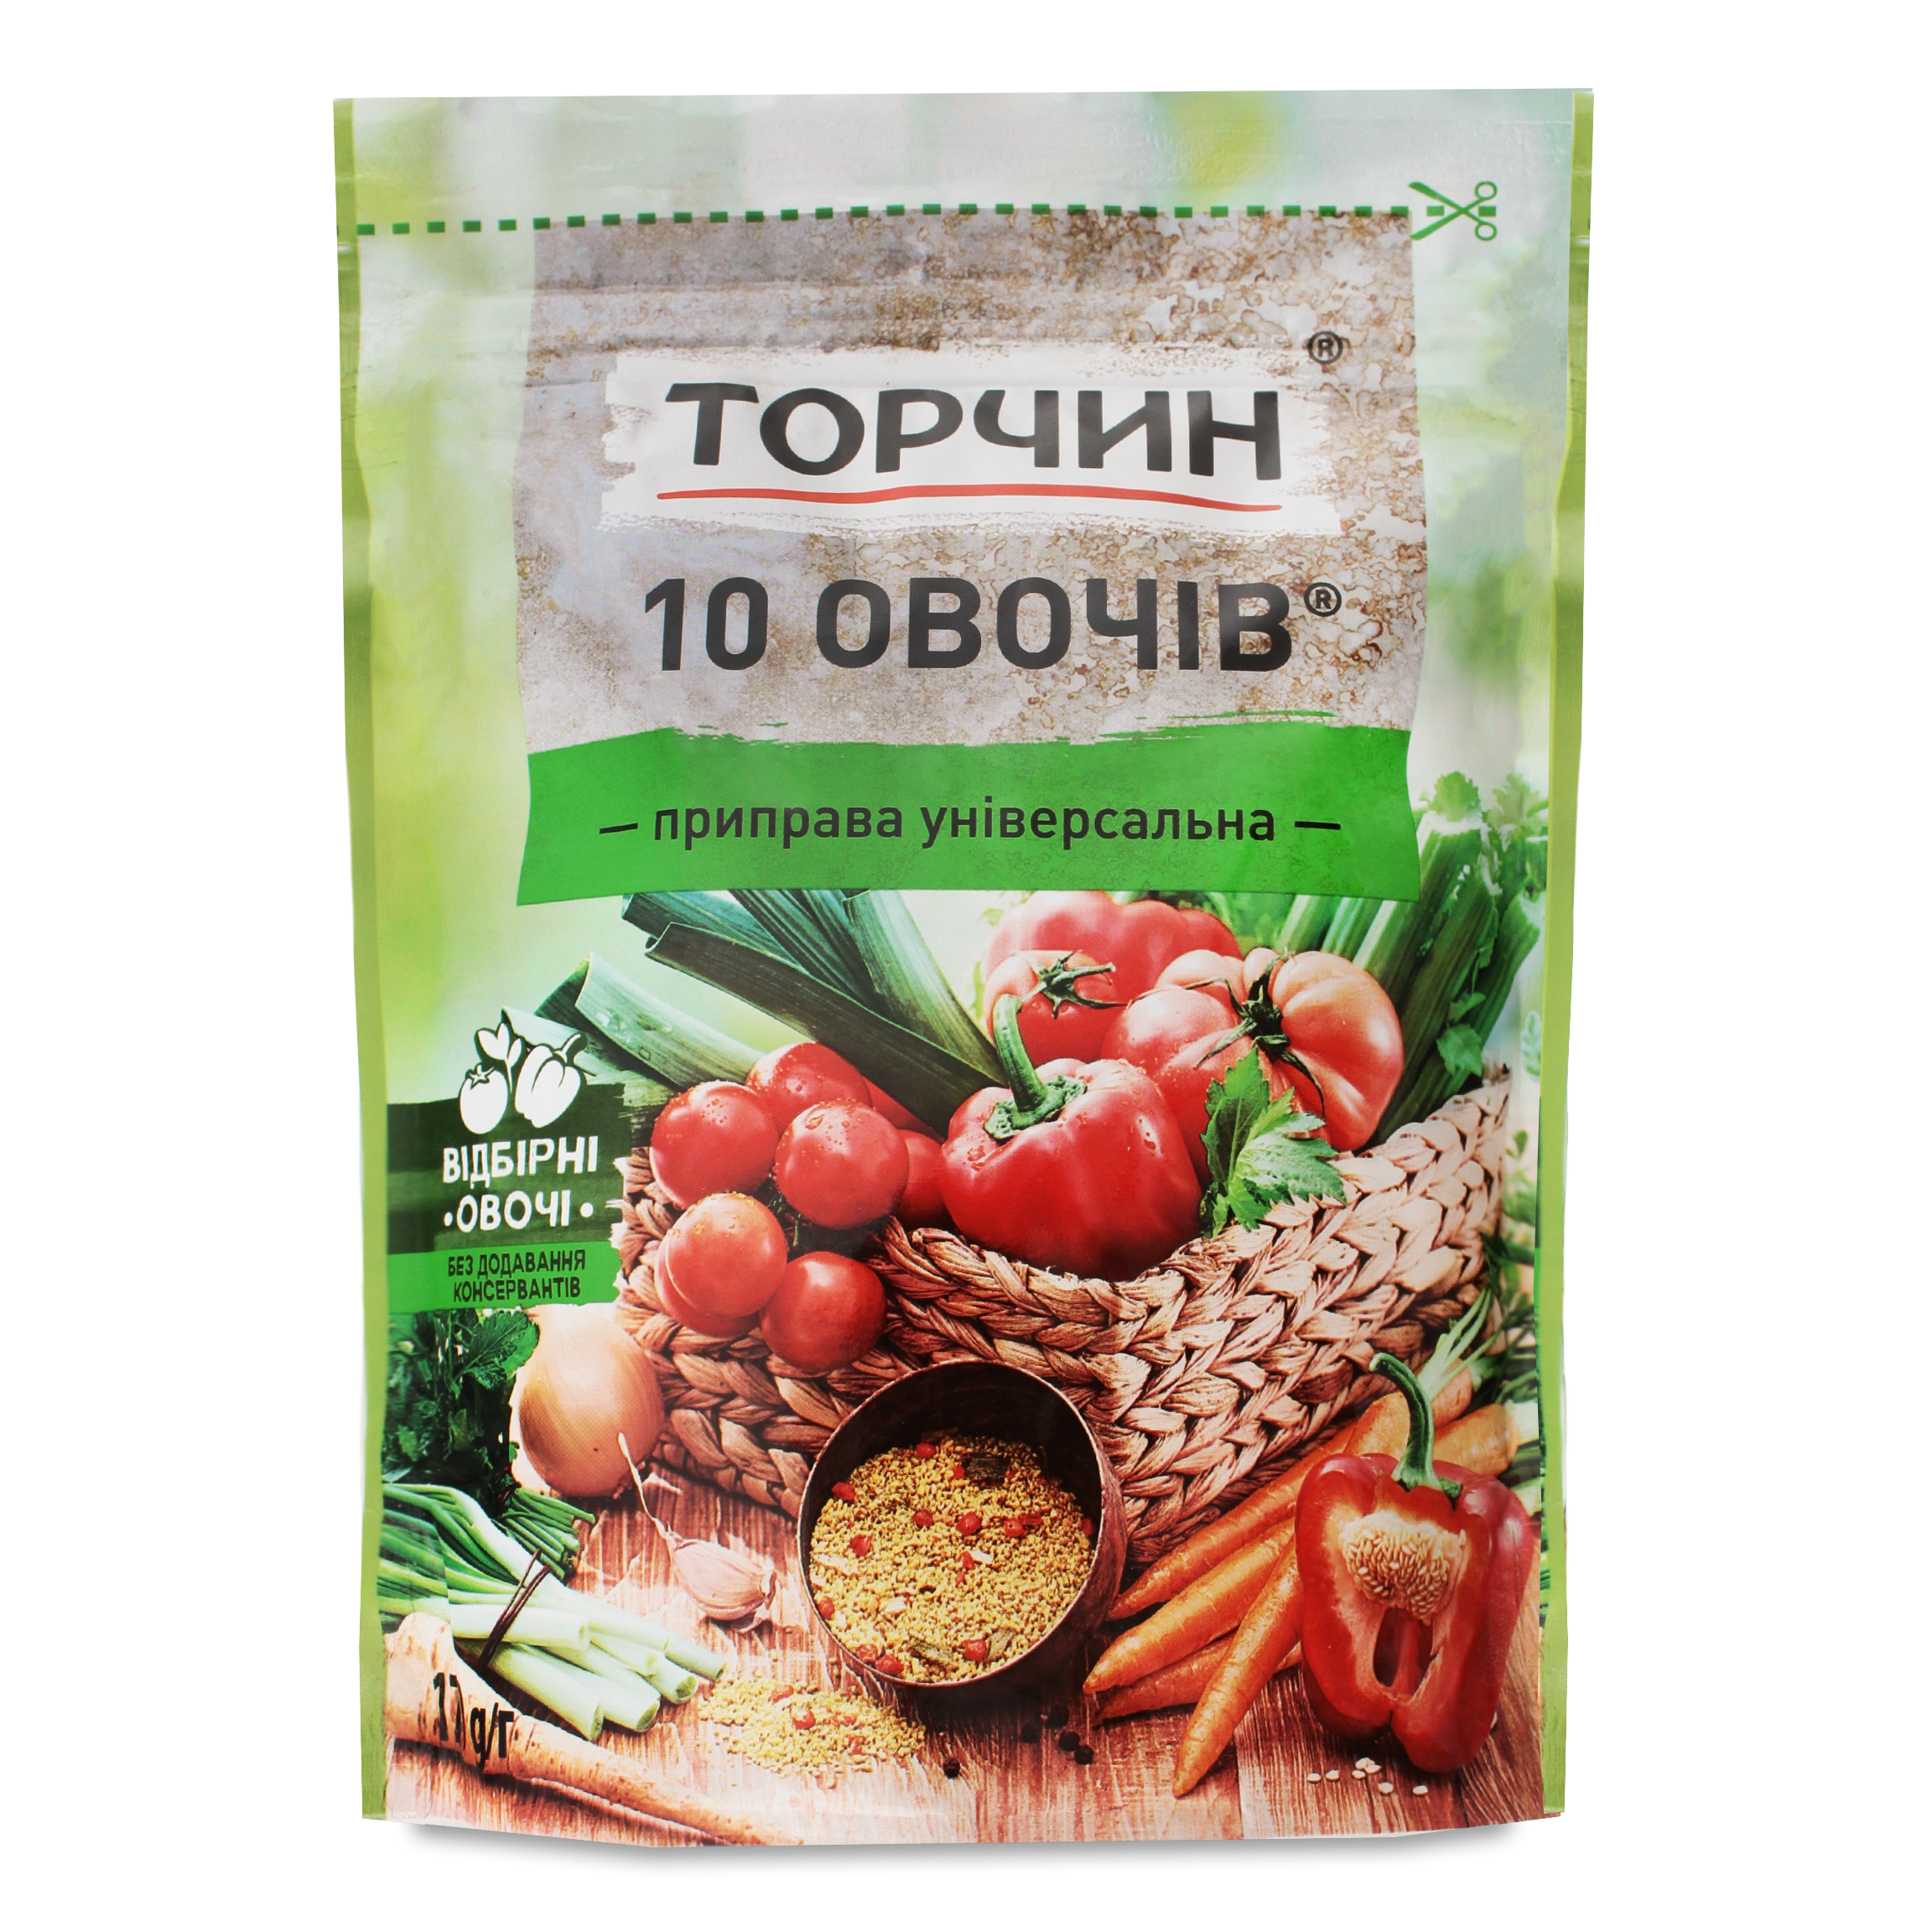 Torchyn 10 Vegetables universal seasoning 170g